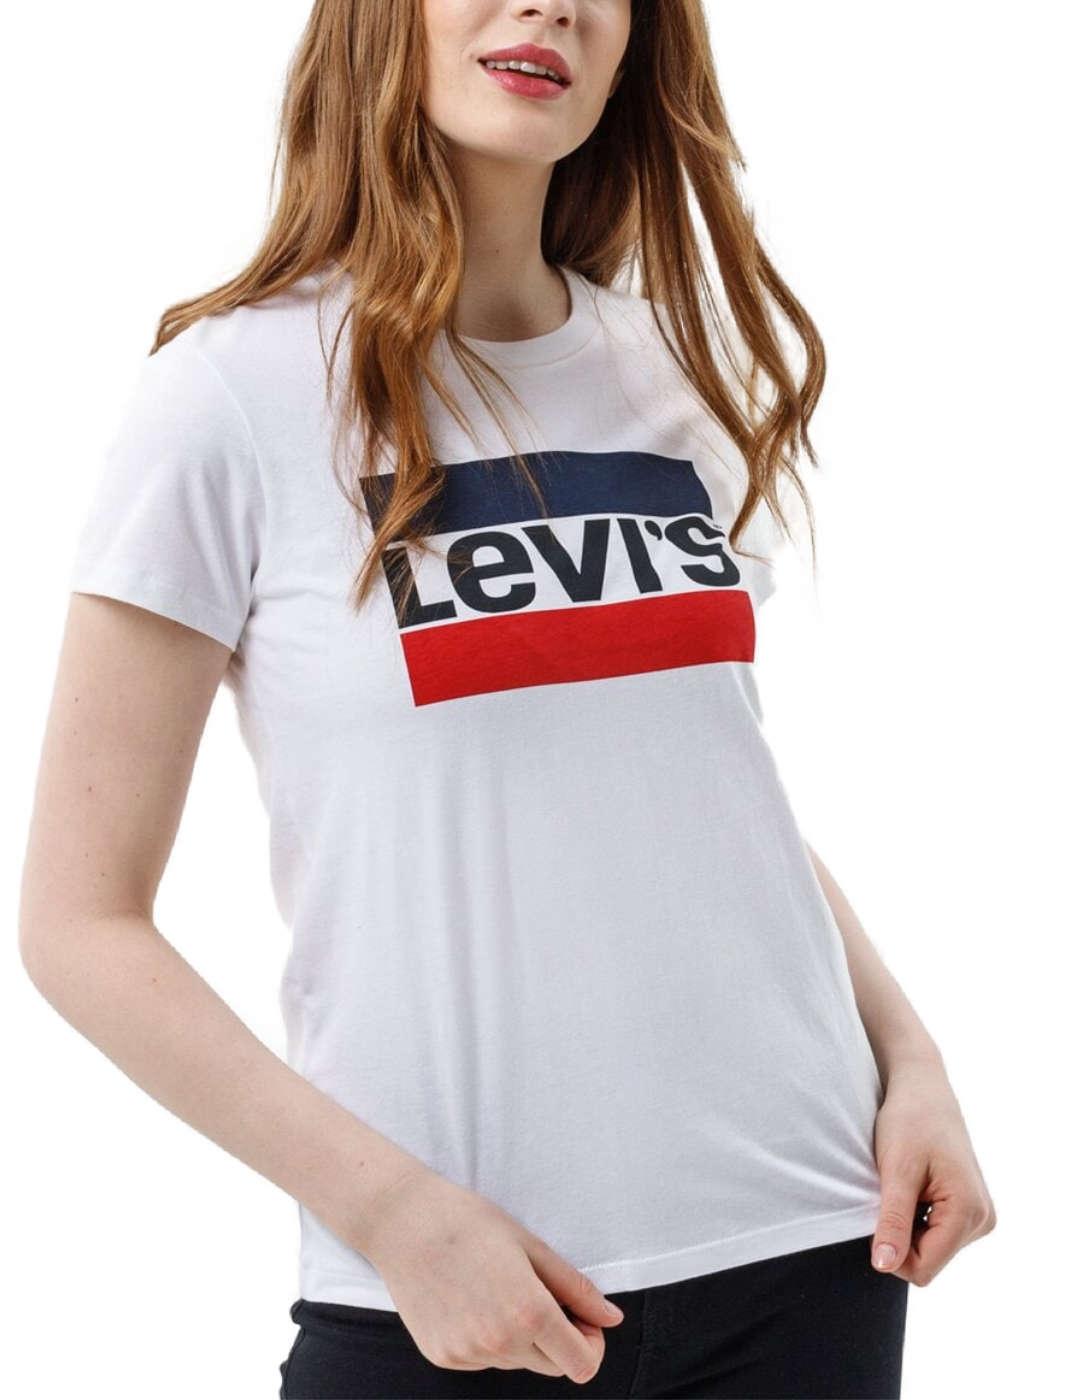 Camiseta levis logo 84r blanca manga corta mujer-